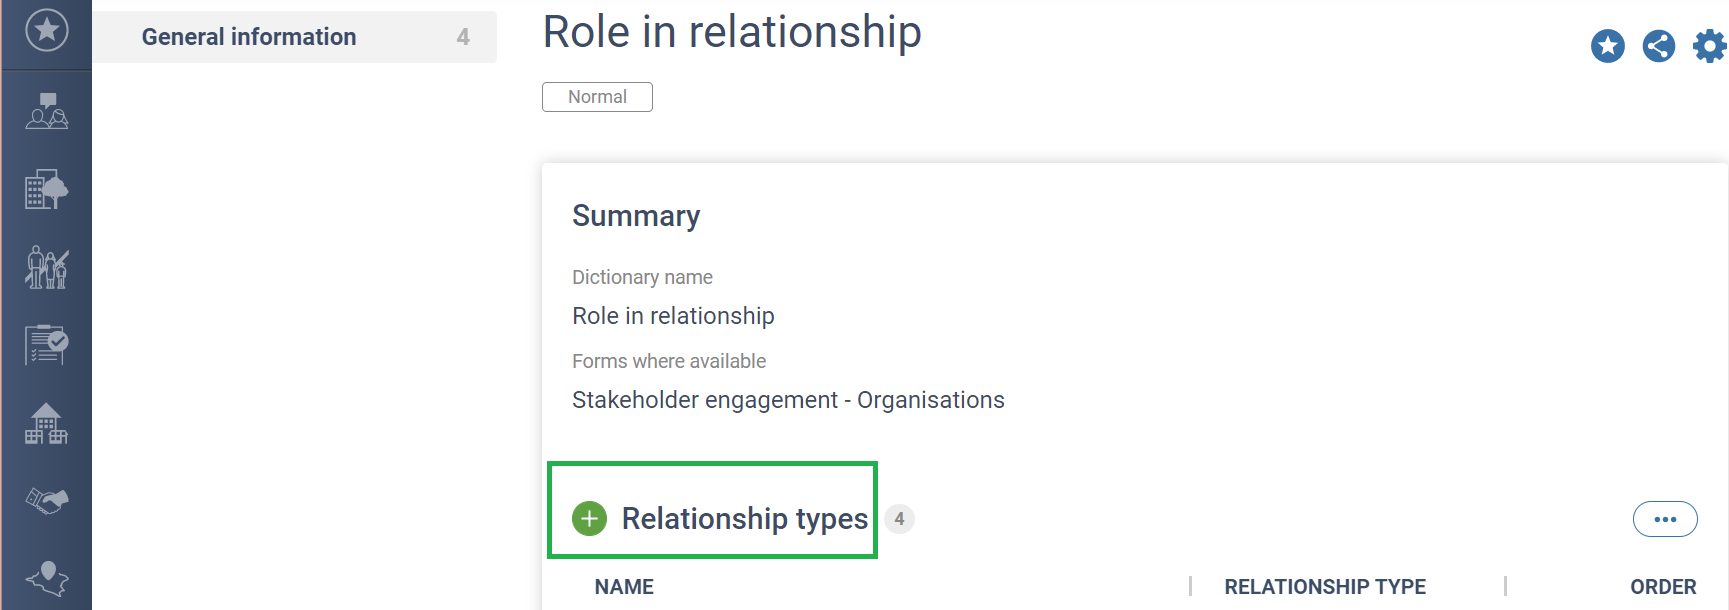 SE_3.Define_relationship_types_between_organisations.png